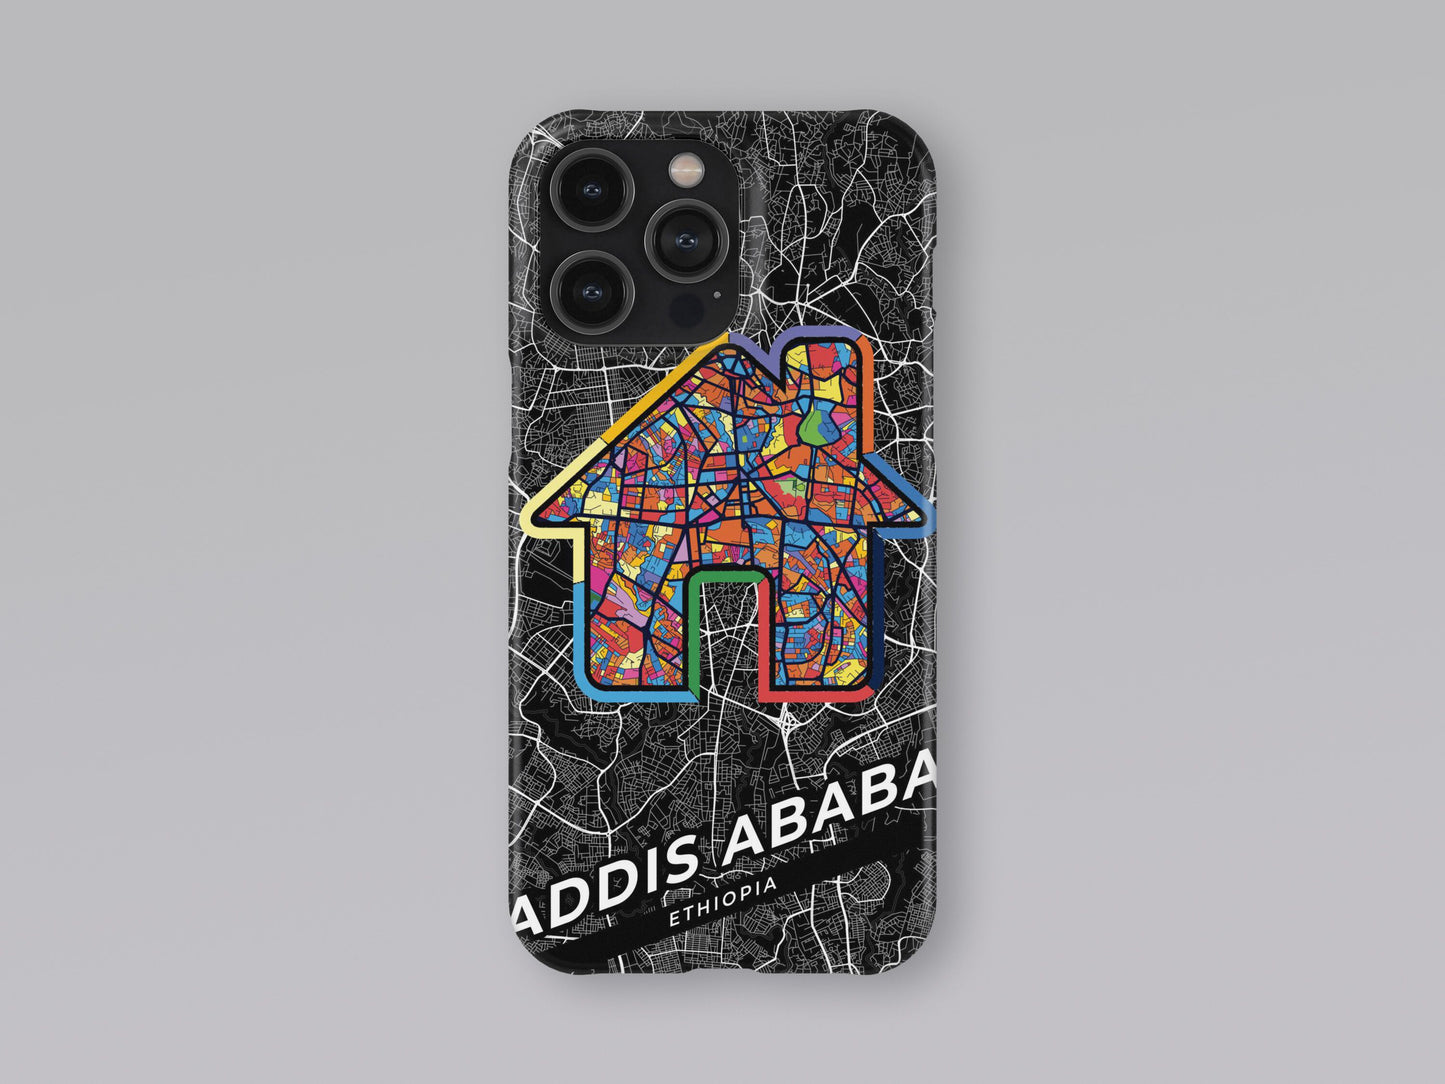 Addis Ababa Ethiopia slim phone case with colorful icon. Birthday, wedding or housewarming gift. Couple match cases. 3